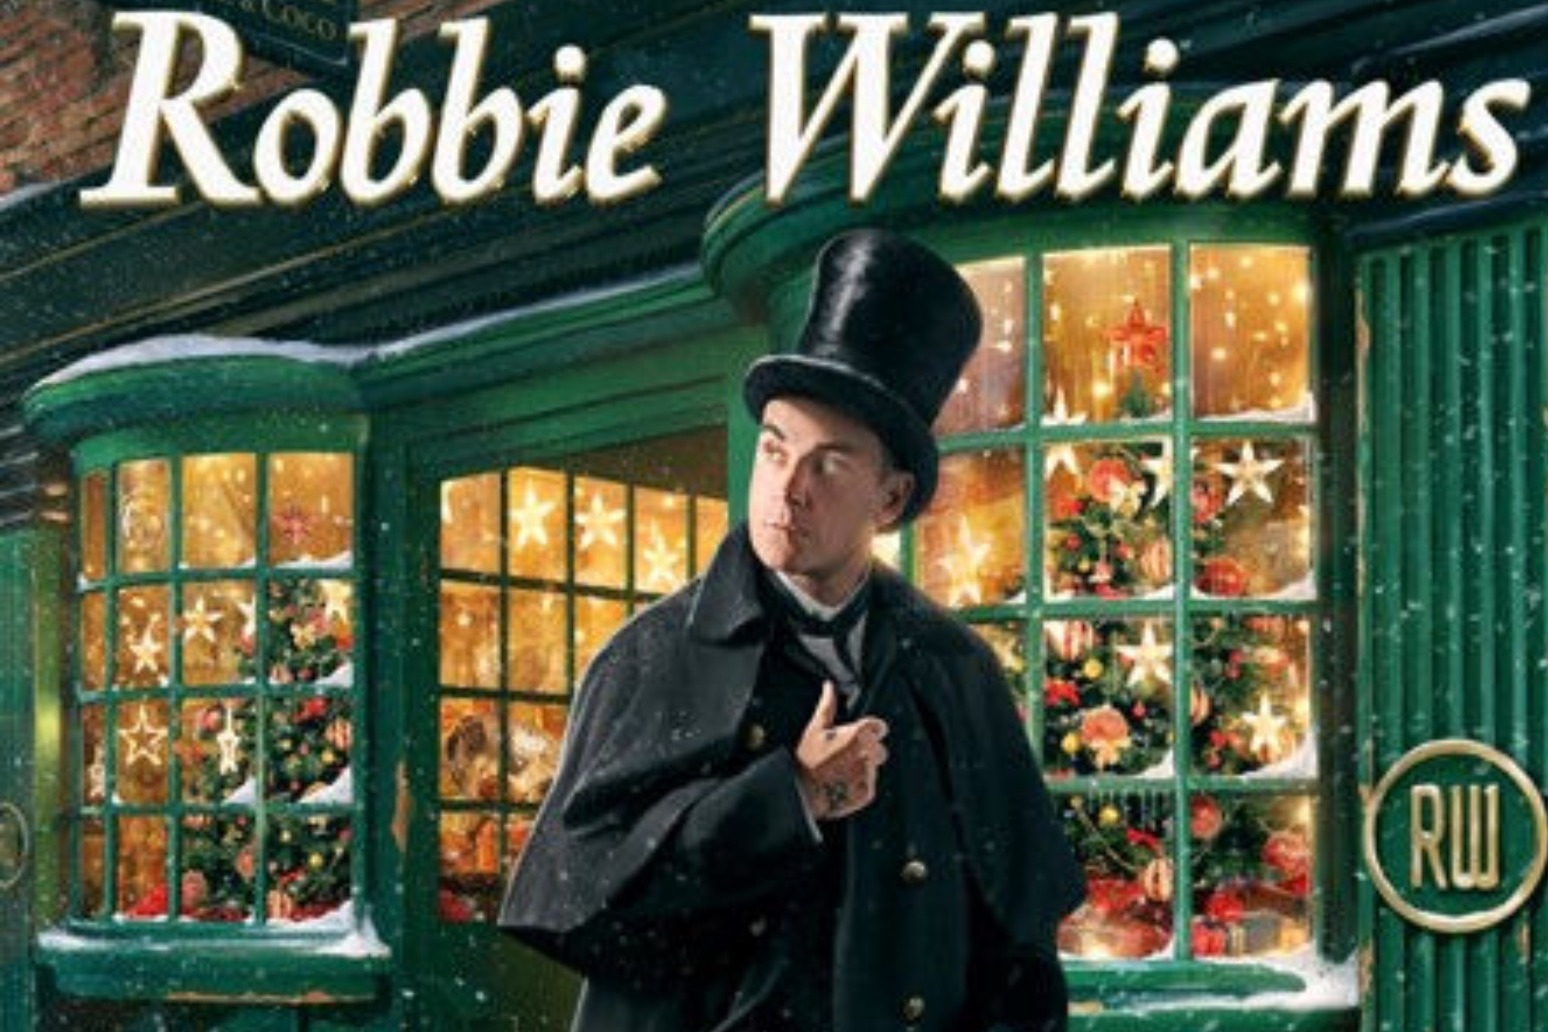 ROBBIE WILLIAMS GETS FESTIVE WITH TYSON FURY FOR CHRISTMAS ALBUM 